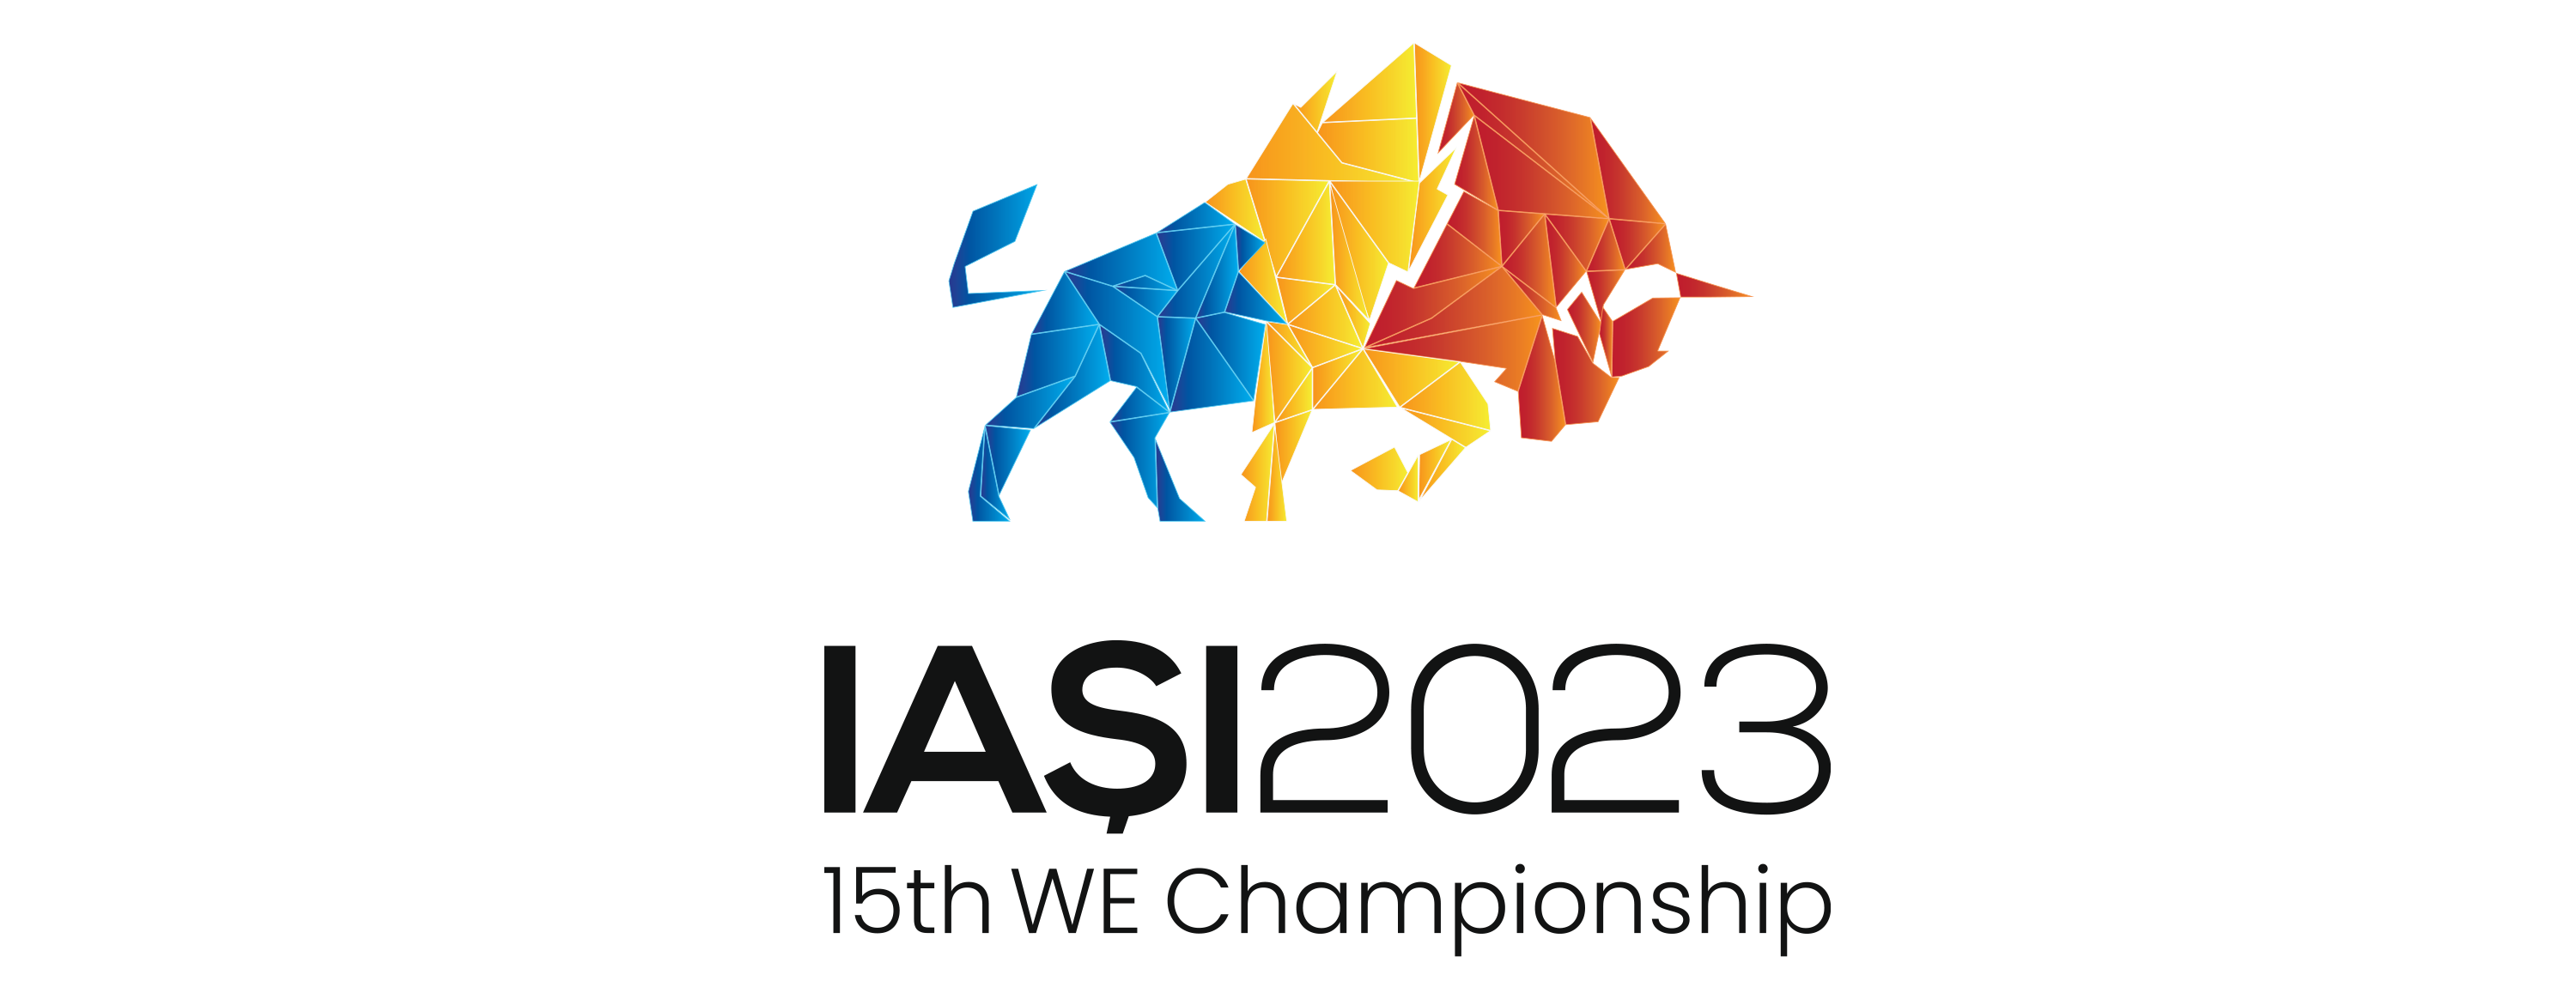 IASI2023 15th WE Championship